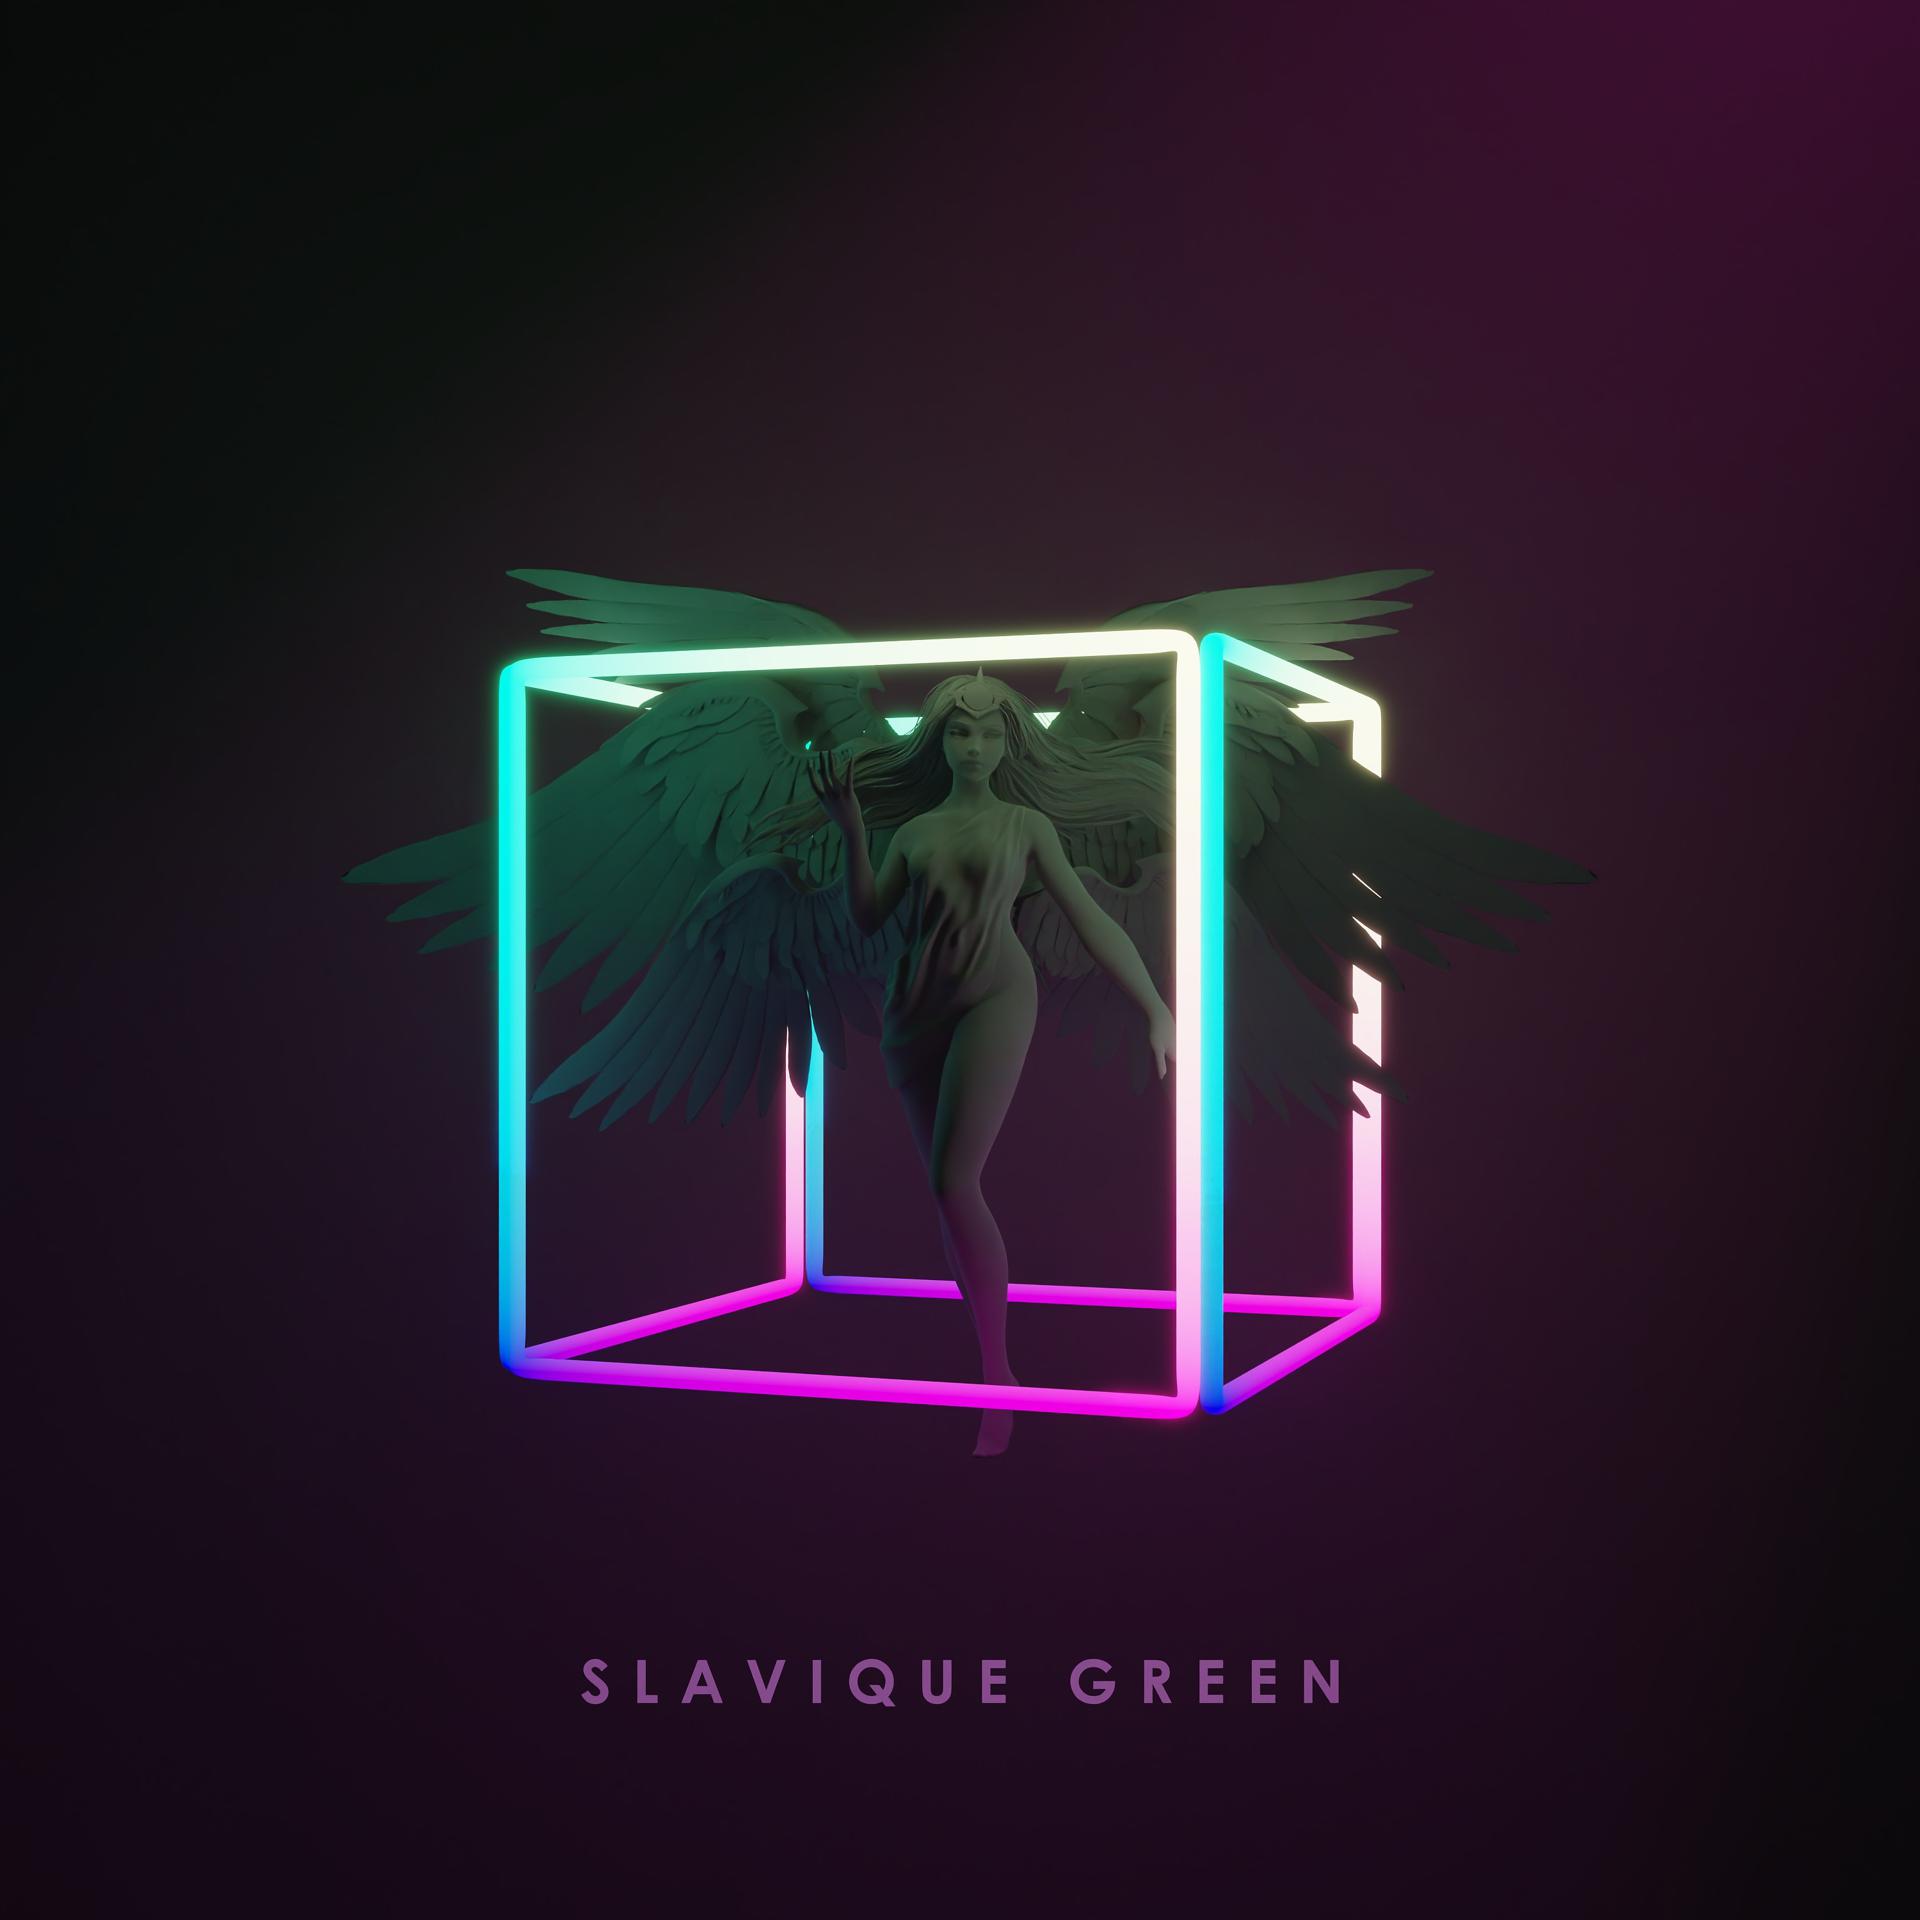 Slavique green your. Slavique Green. Slavique Green Trapped. Slavique Green последнее. "Slavique Green" && ( исполнитель | группа | музыка | Music | Band | artist ) && (фото | photo).